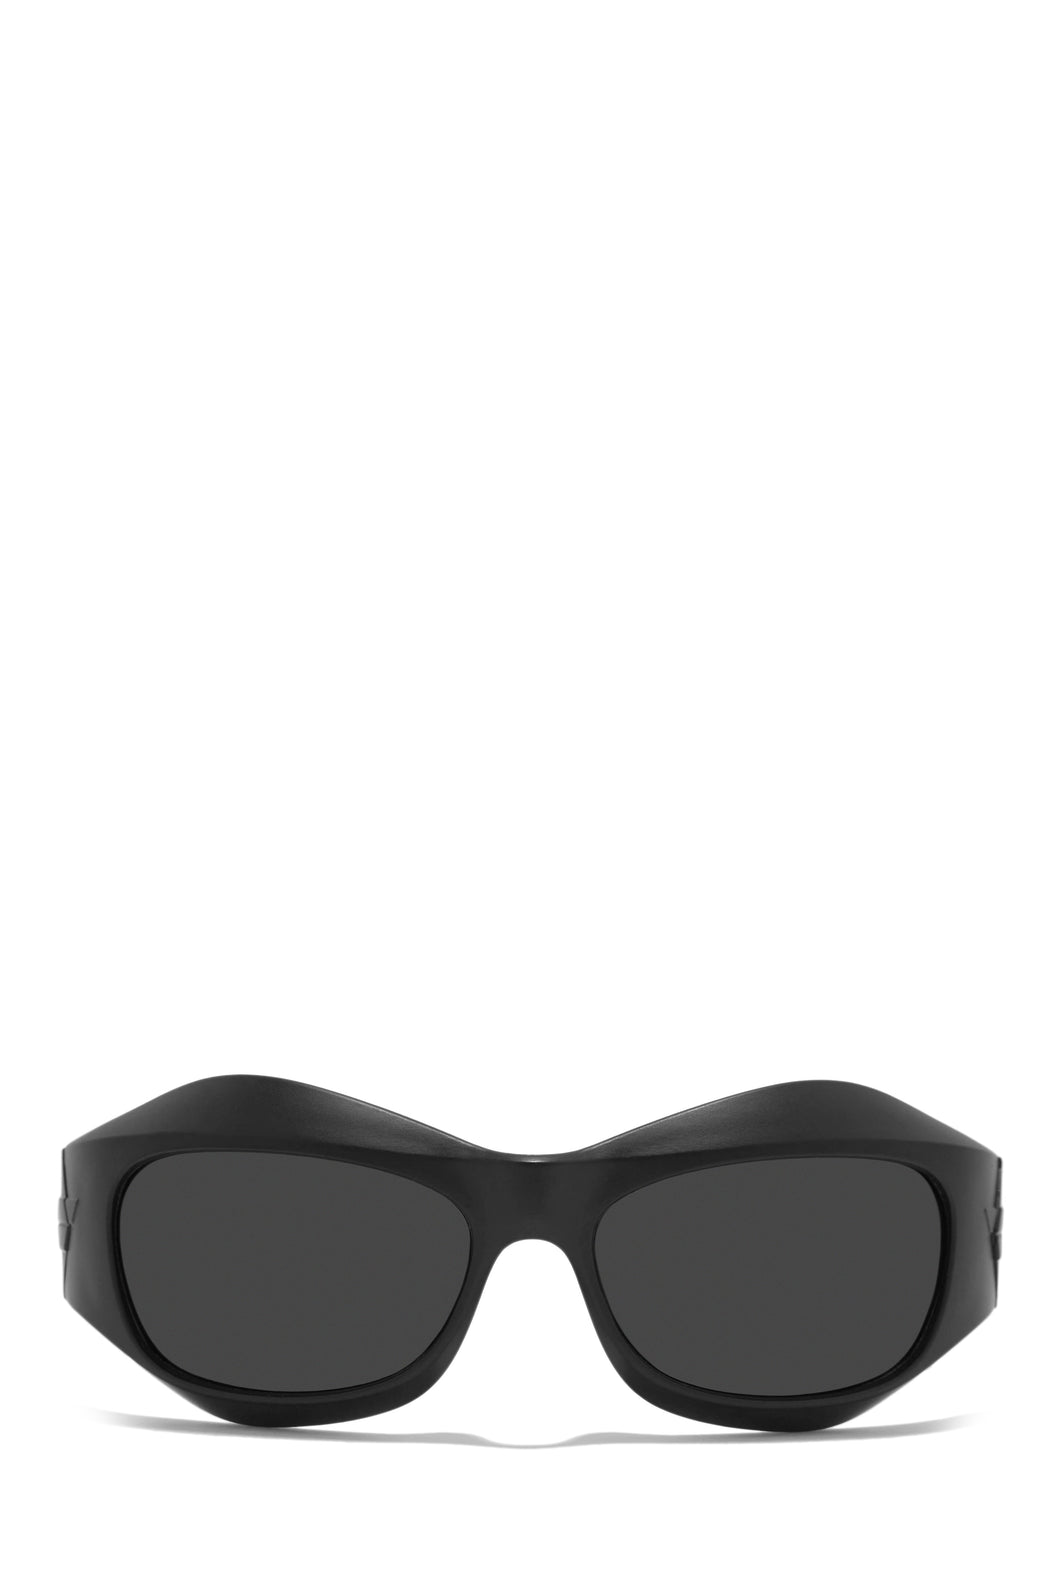 Made You Look Matte Frame Sunglasses - Black